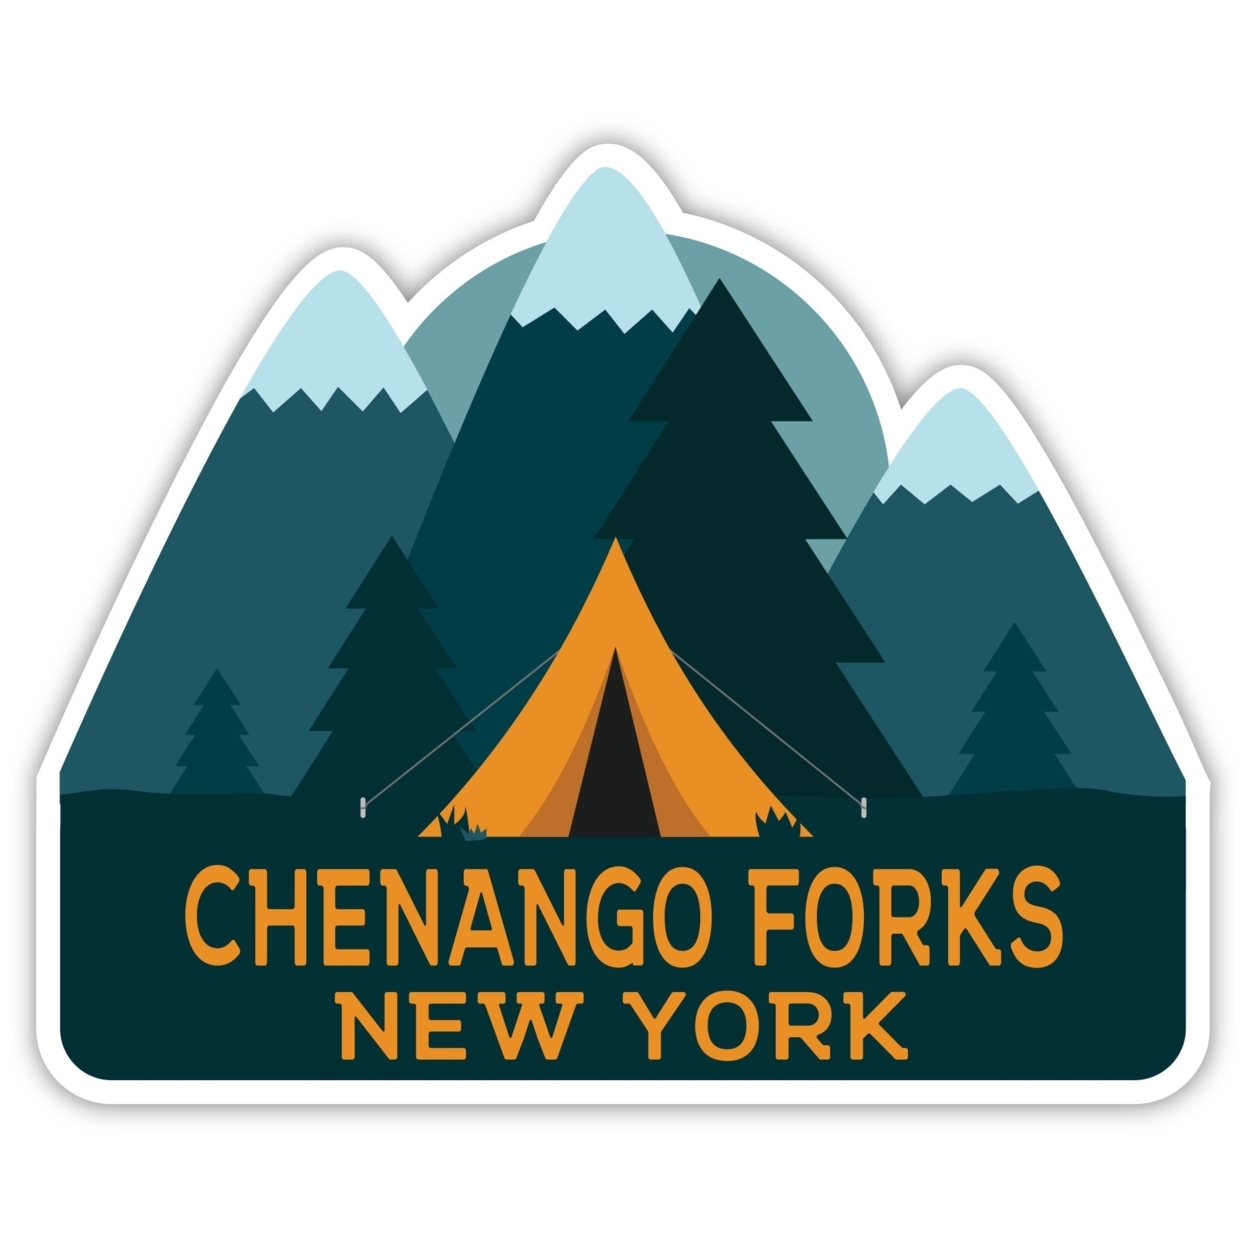 Chenango Forks New York Souvenir Decorative Stickers (Choose Theme And Size) - Single Unit, 4-Inch, Tent